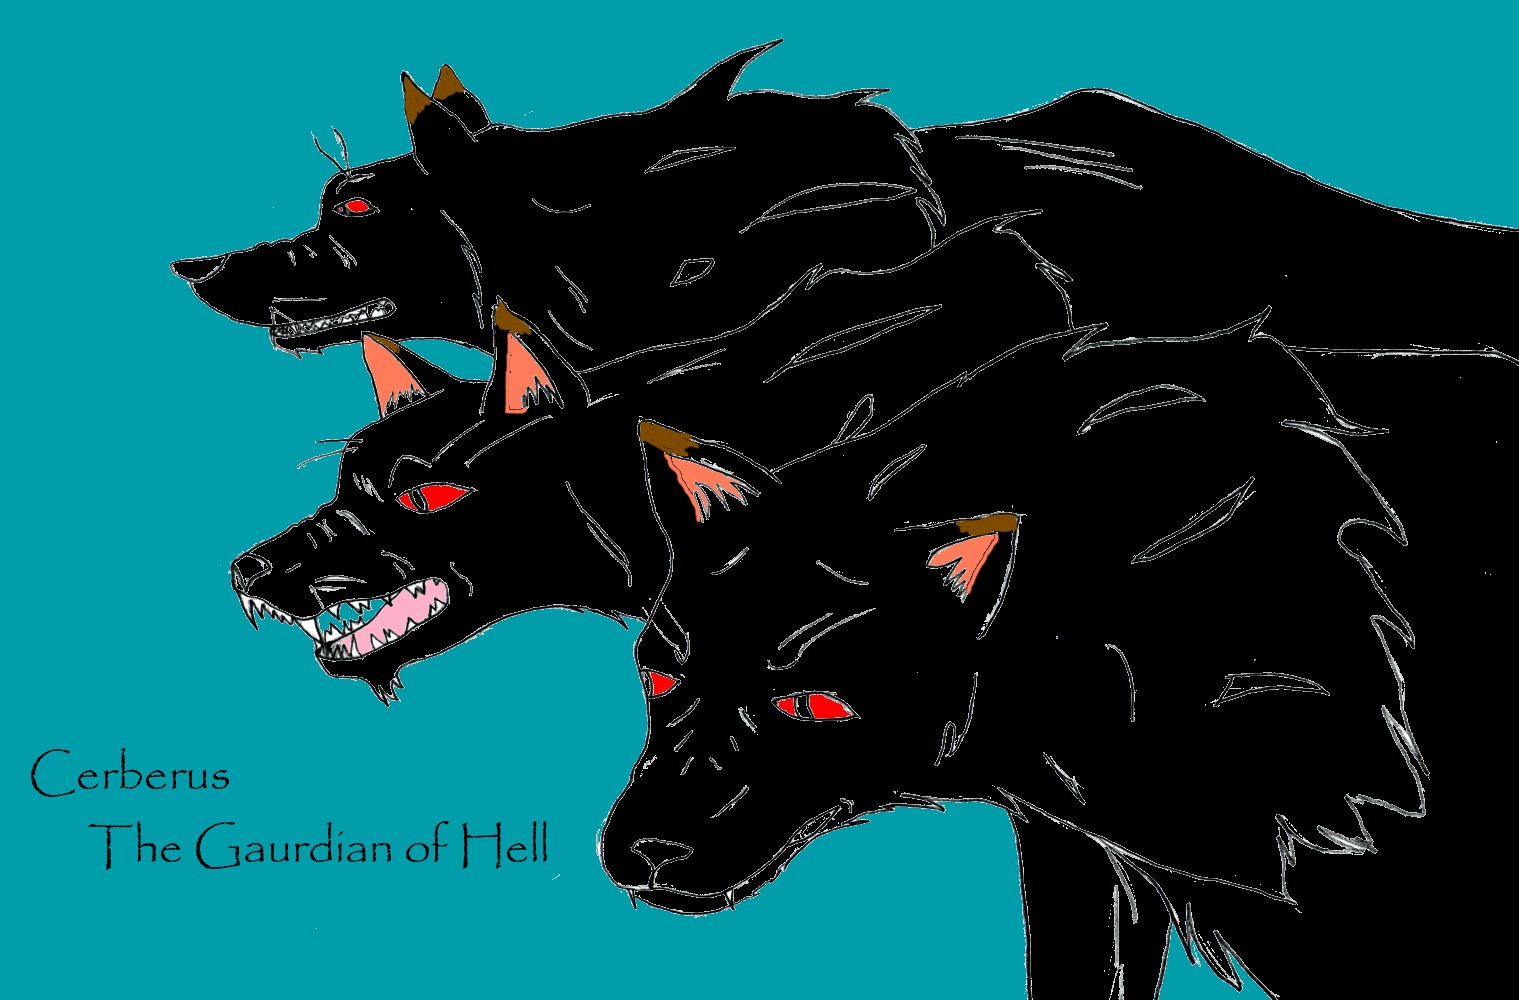 Cerberus The Gaurdian of Hell by wolf_gang